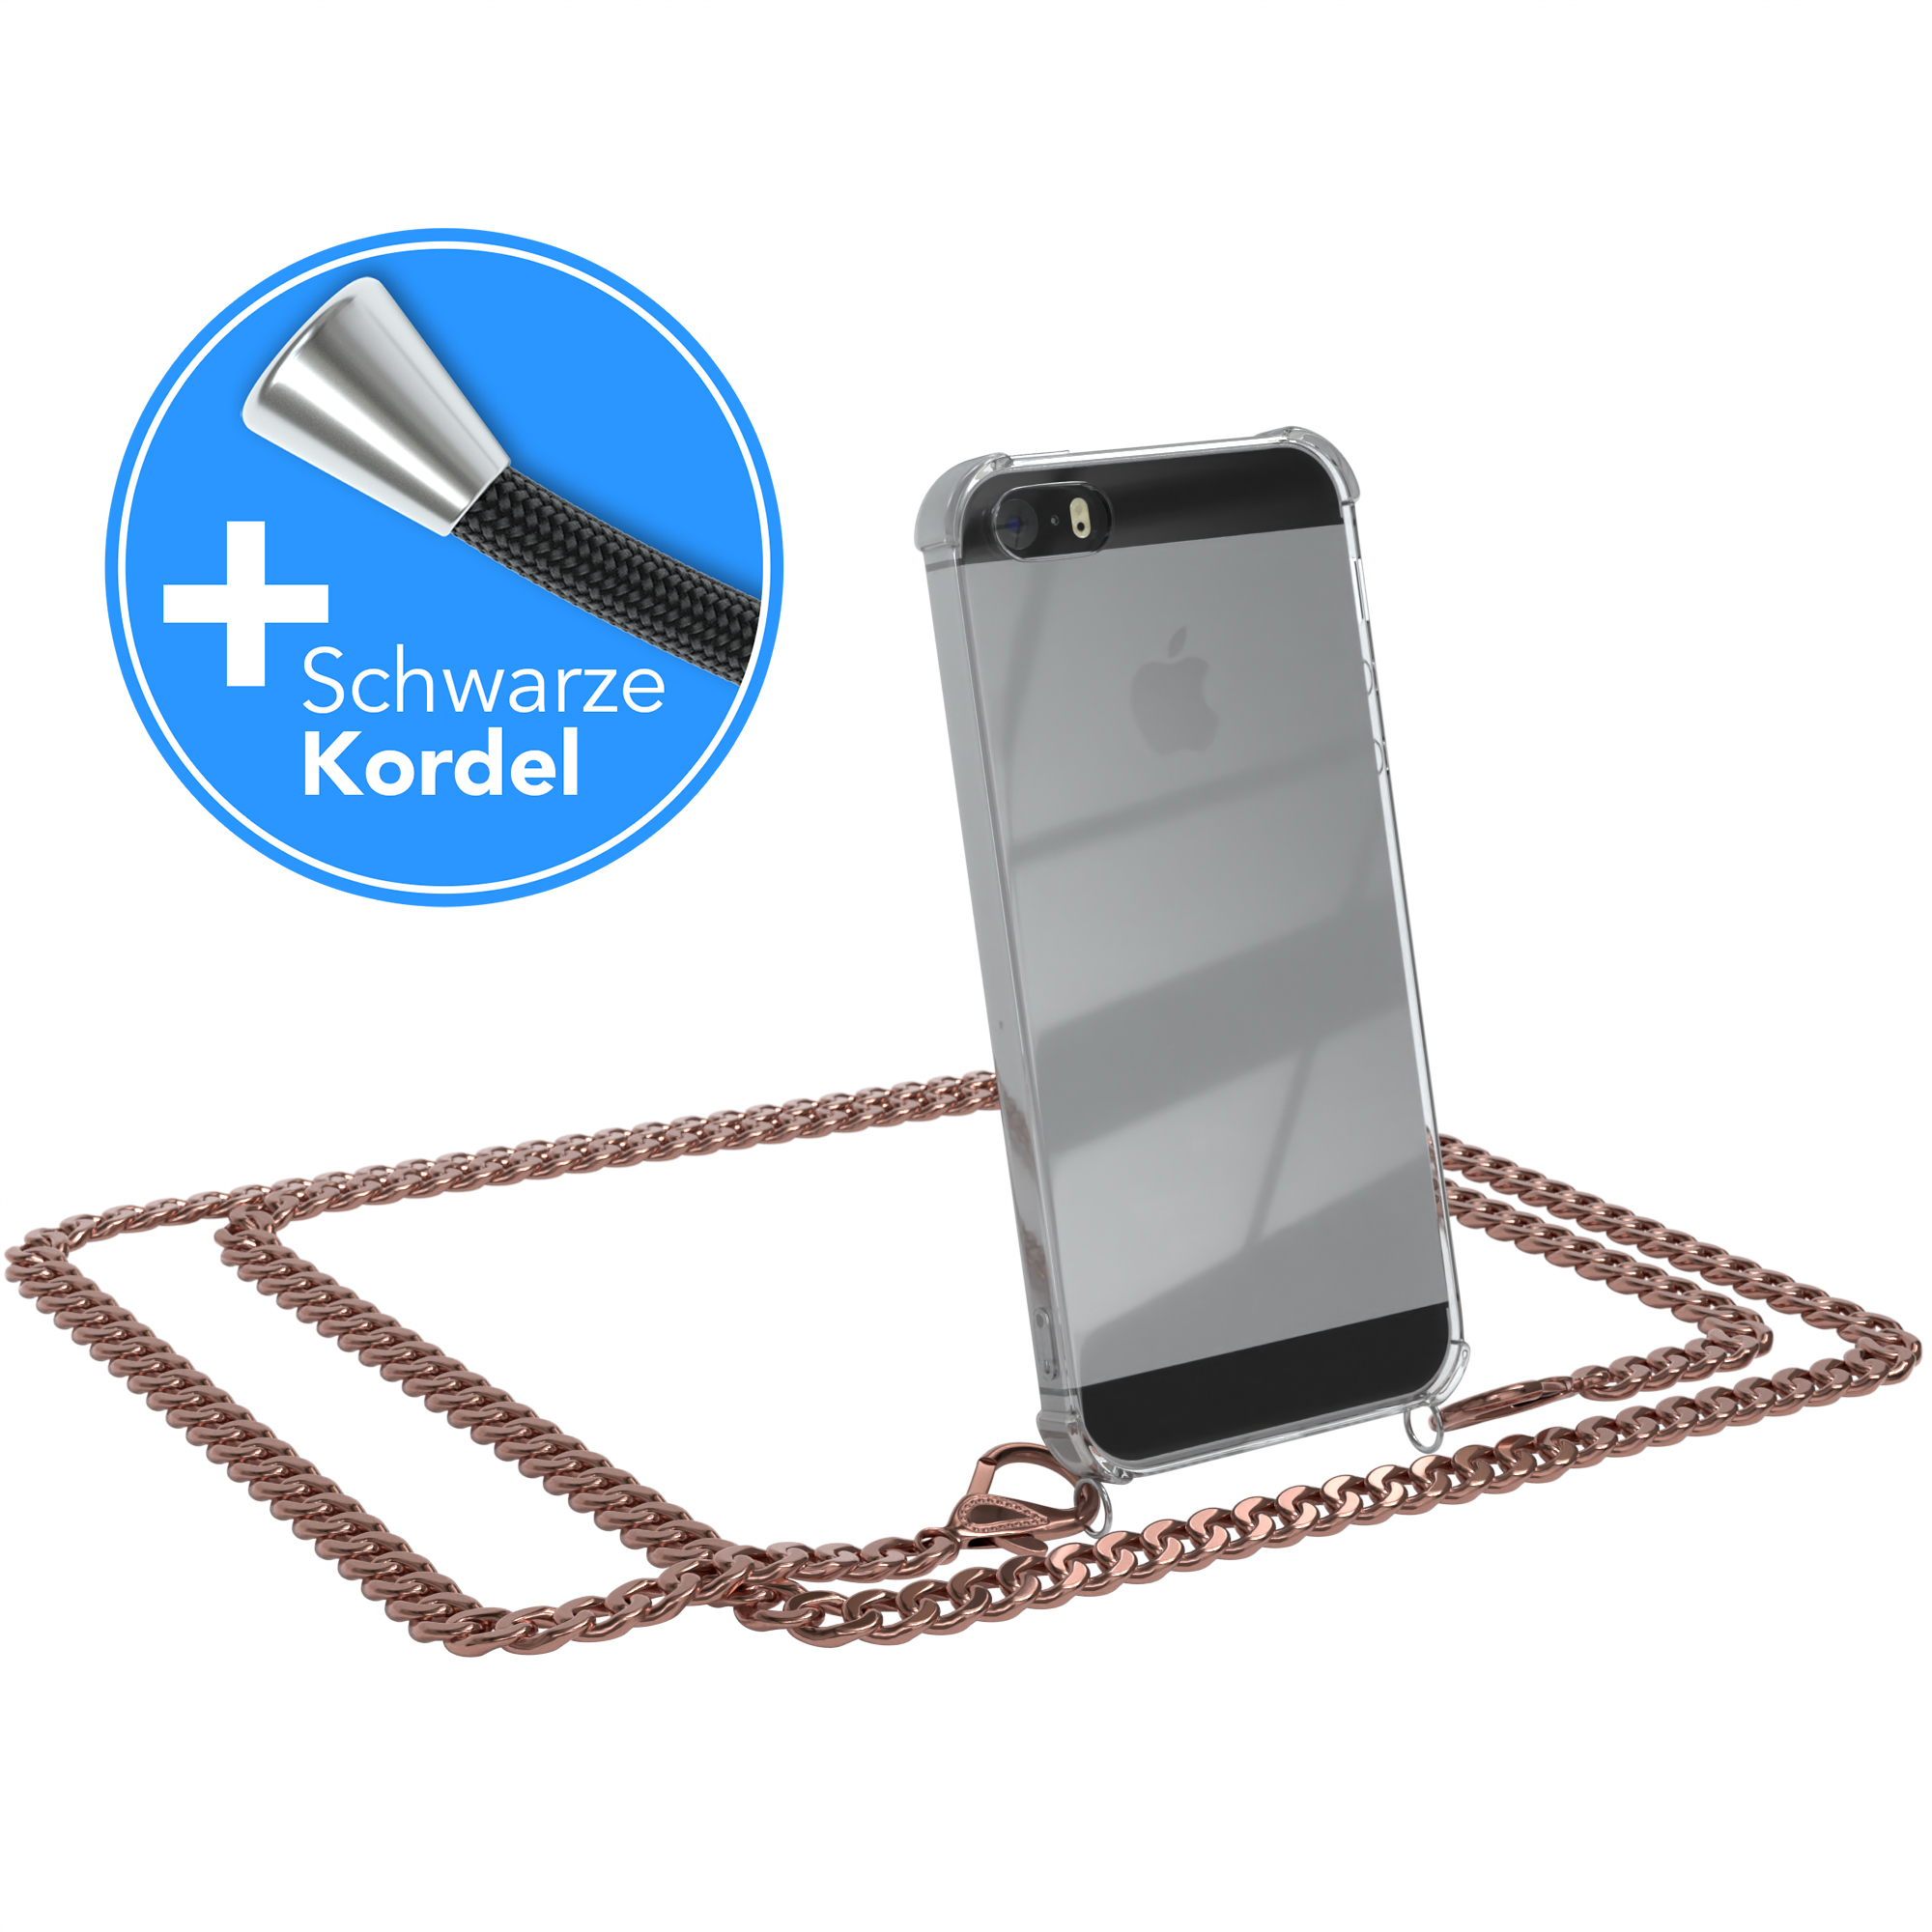 CASE iPhone Rose Handykette extra Metall Kordel + / EAZY SE 2016, Apple, Schwarz, iPhone 5 5S, Umhängetasche,